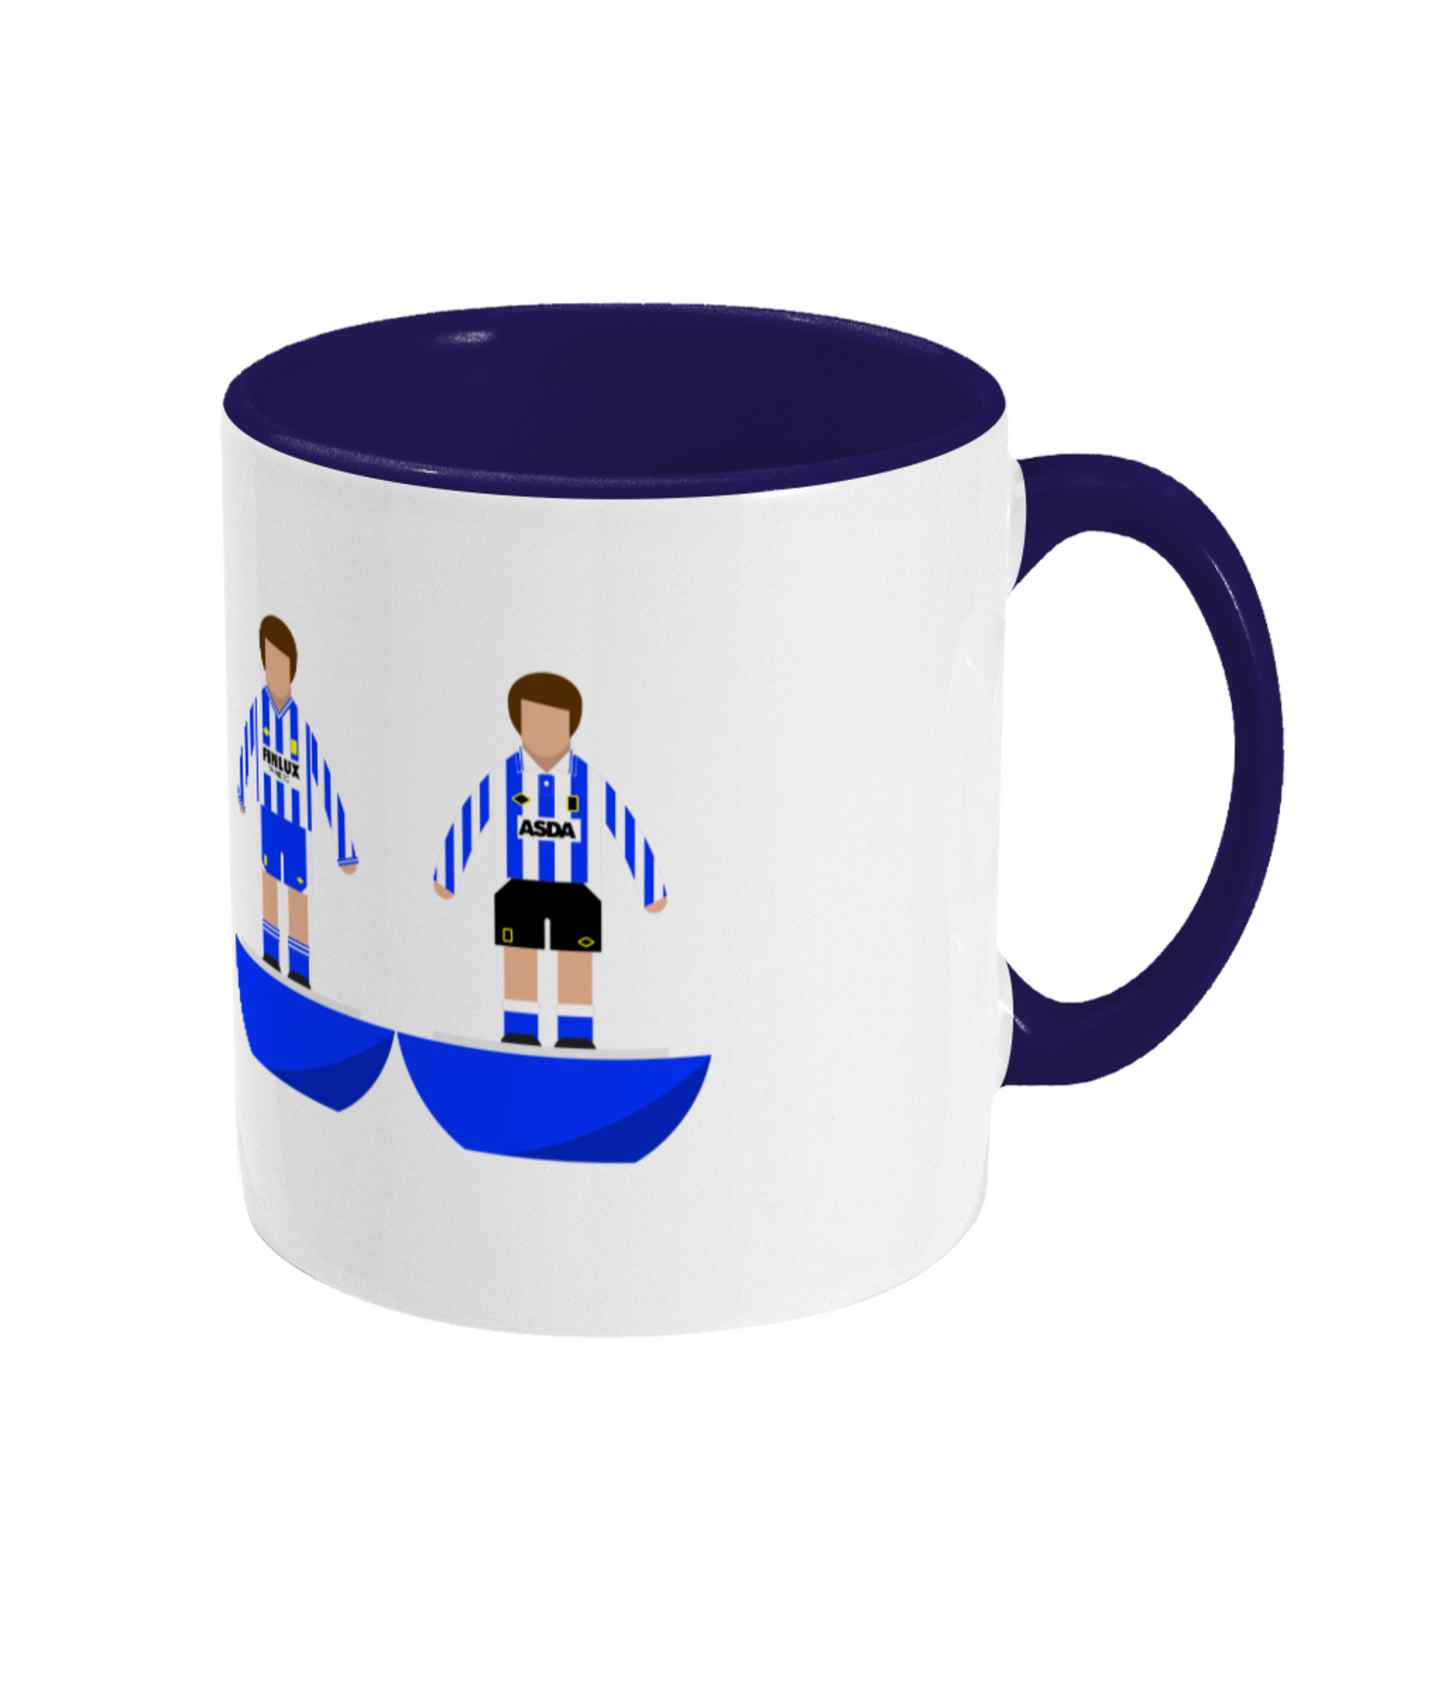 Football Kits 'Sheffield Wednesday combined' Mug